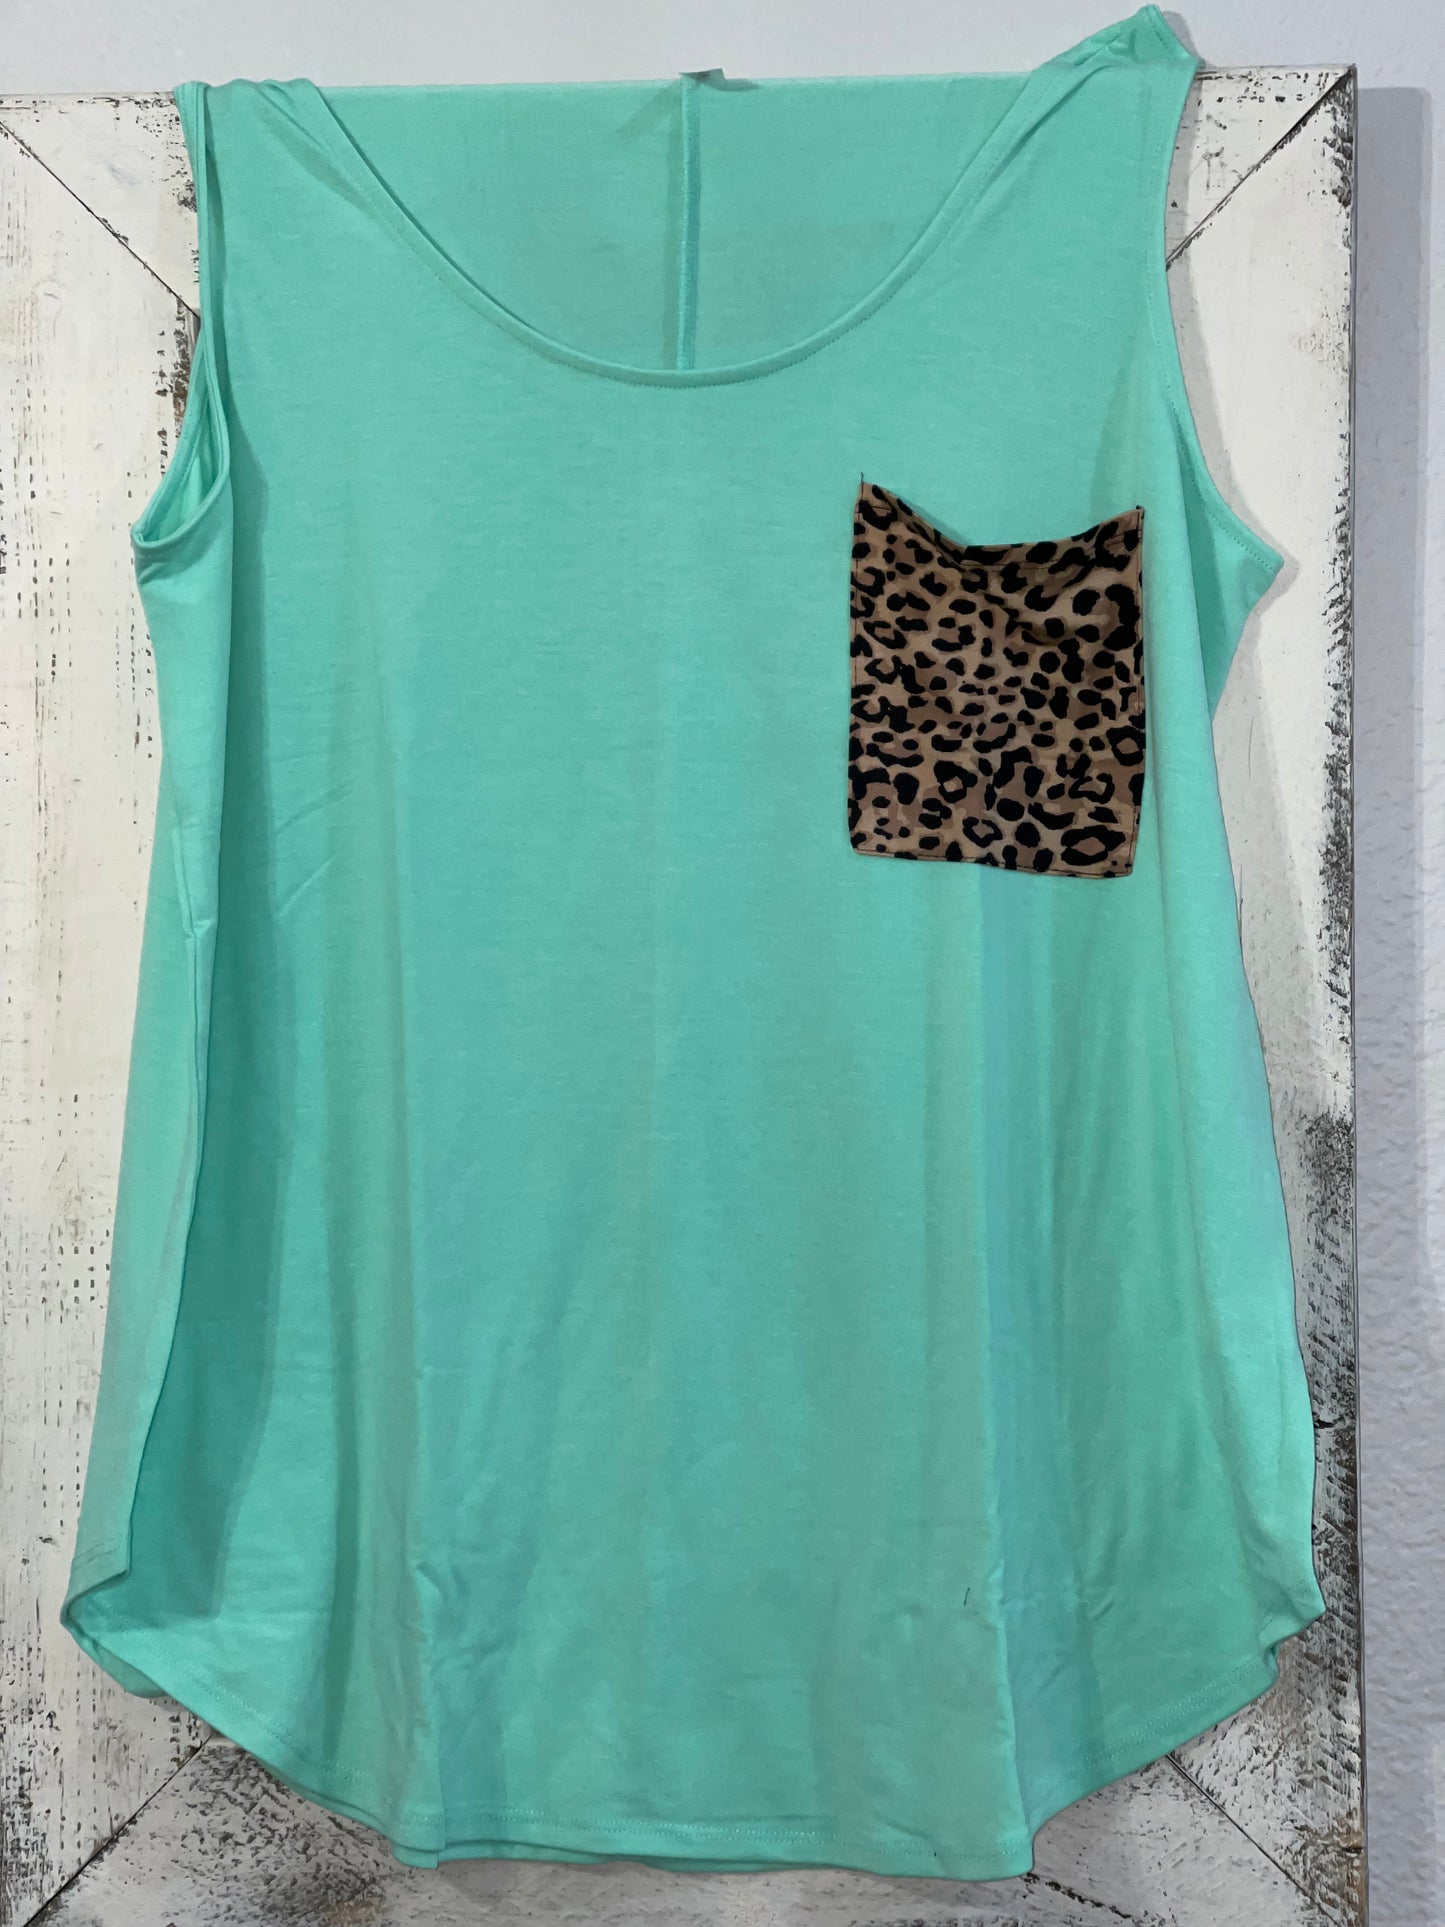 Mint Green Sleeveless Shirt with Leopard Pocket